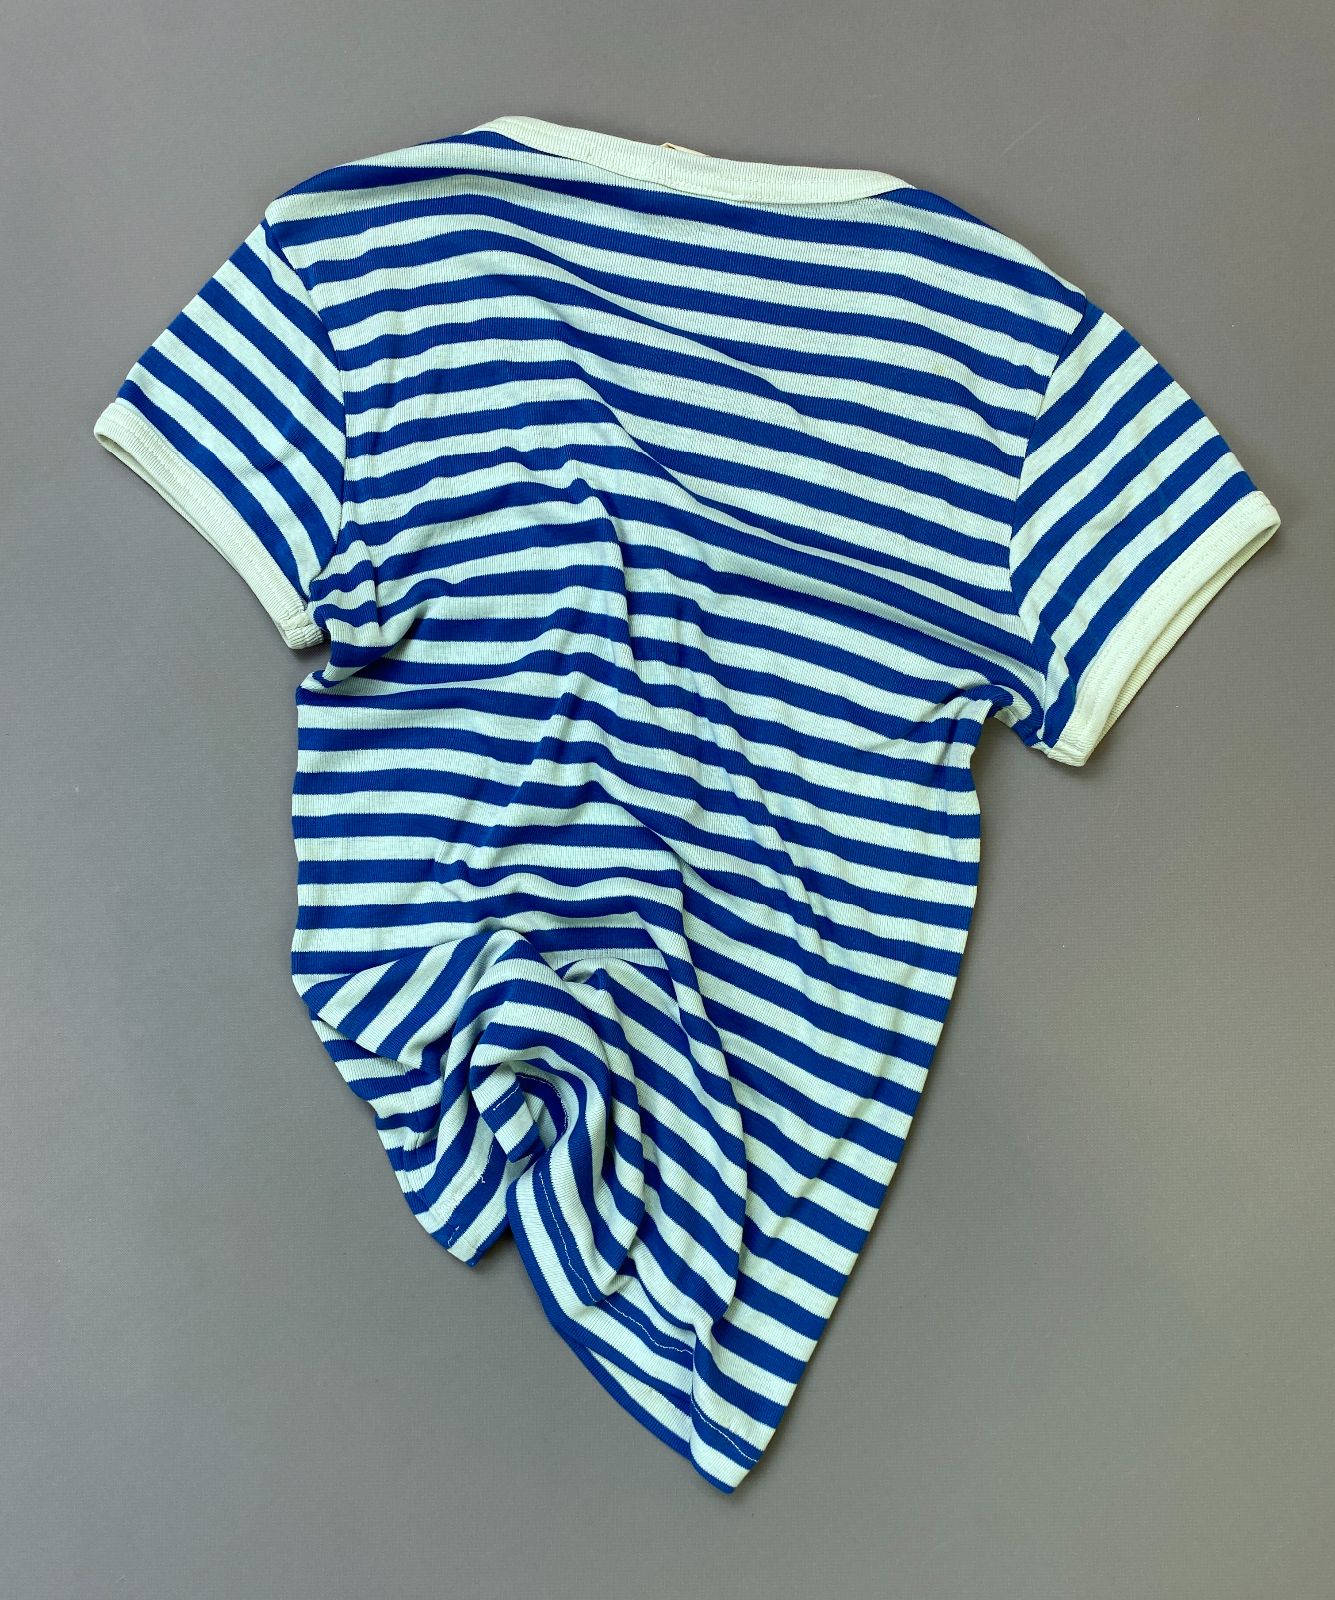 Topshop Striped Maternity Shirt